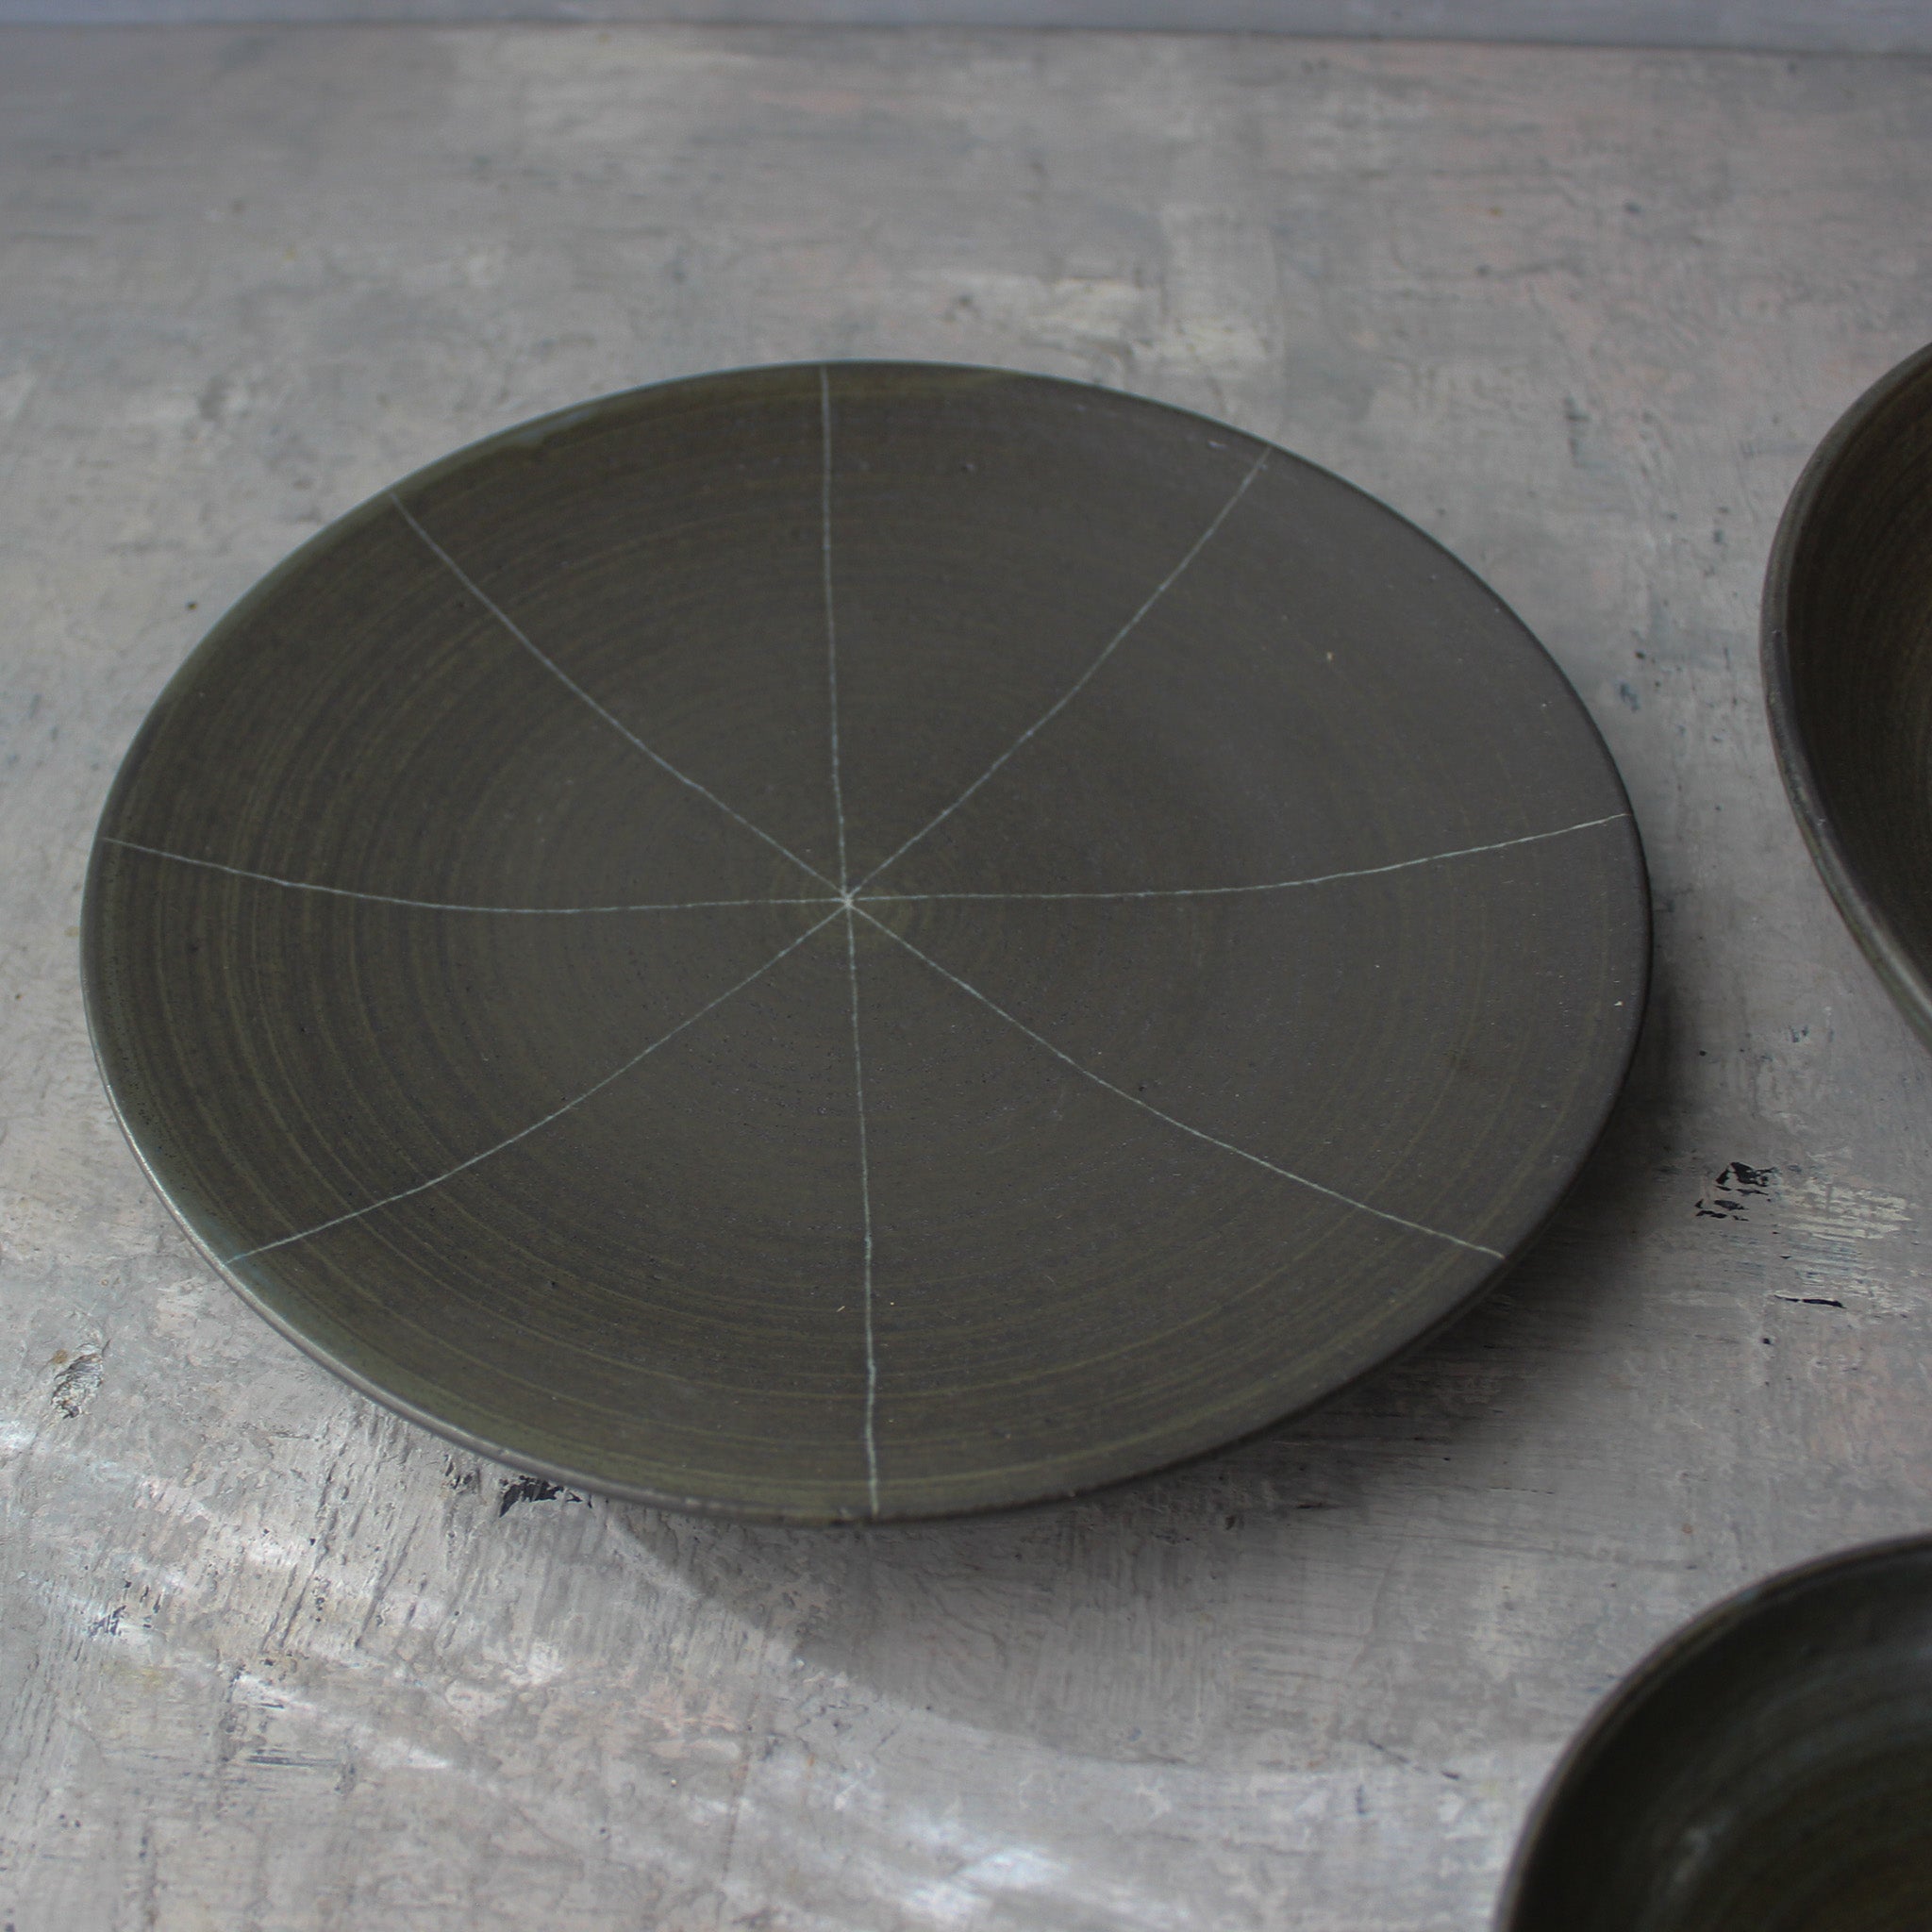 Shigaraki Pottery Plates - Tribe Castlemaine